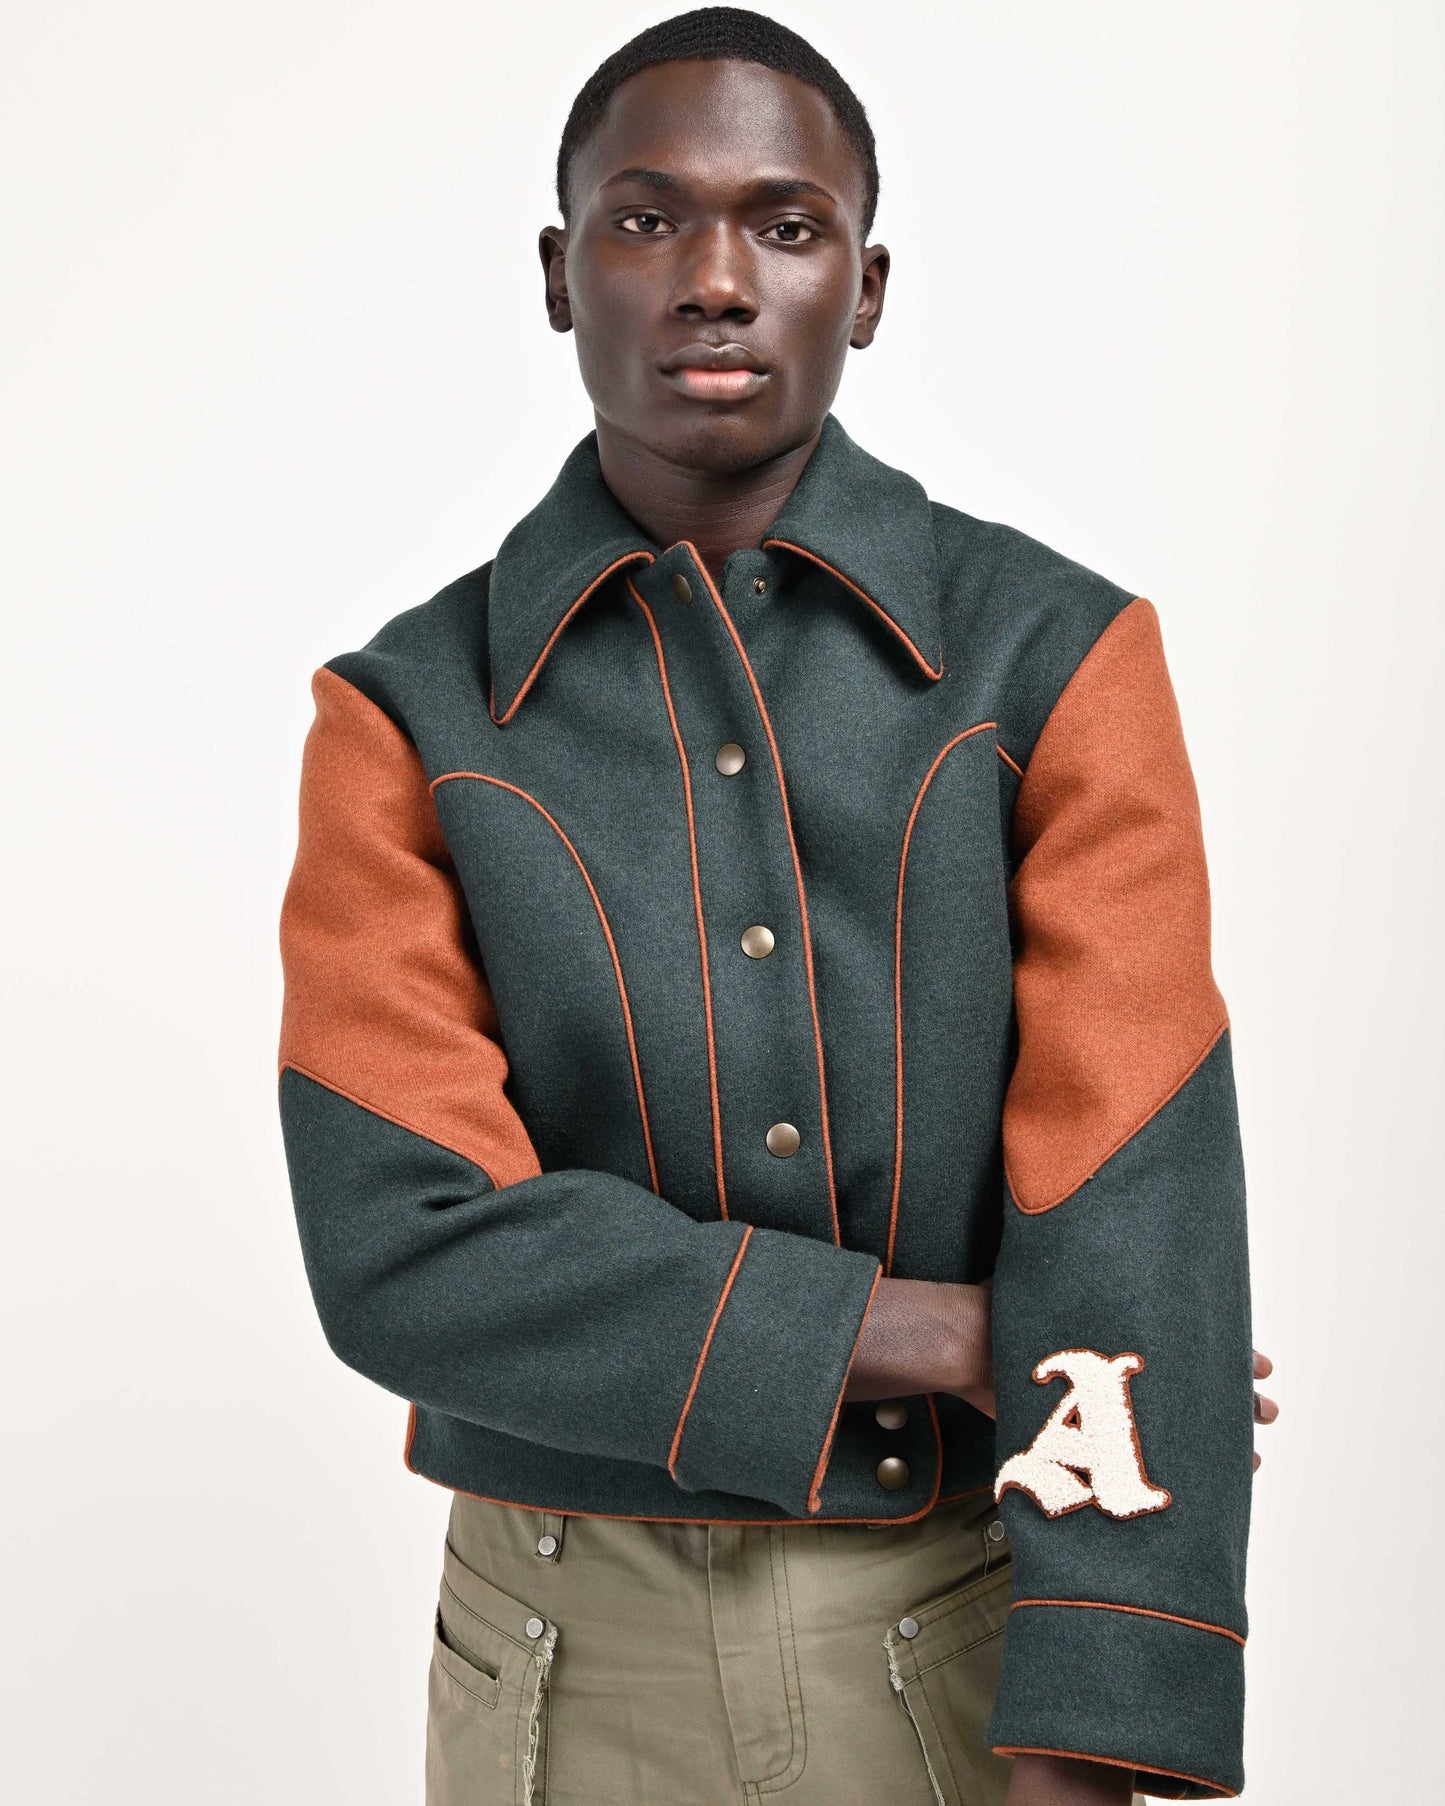 Closer View of Model wearing Green Rue Varsity Jacket by Aseye Studio